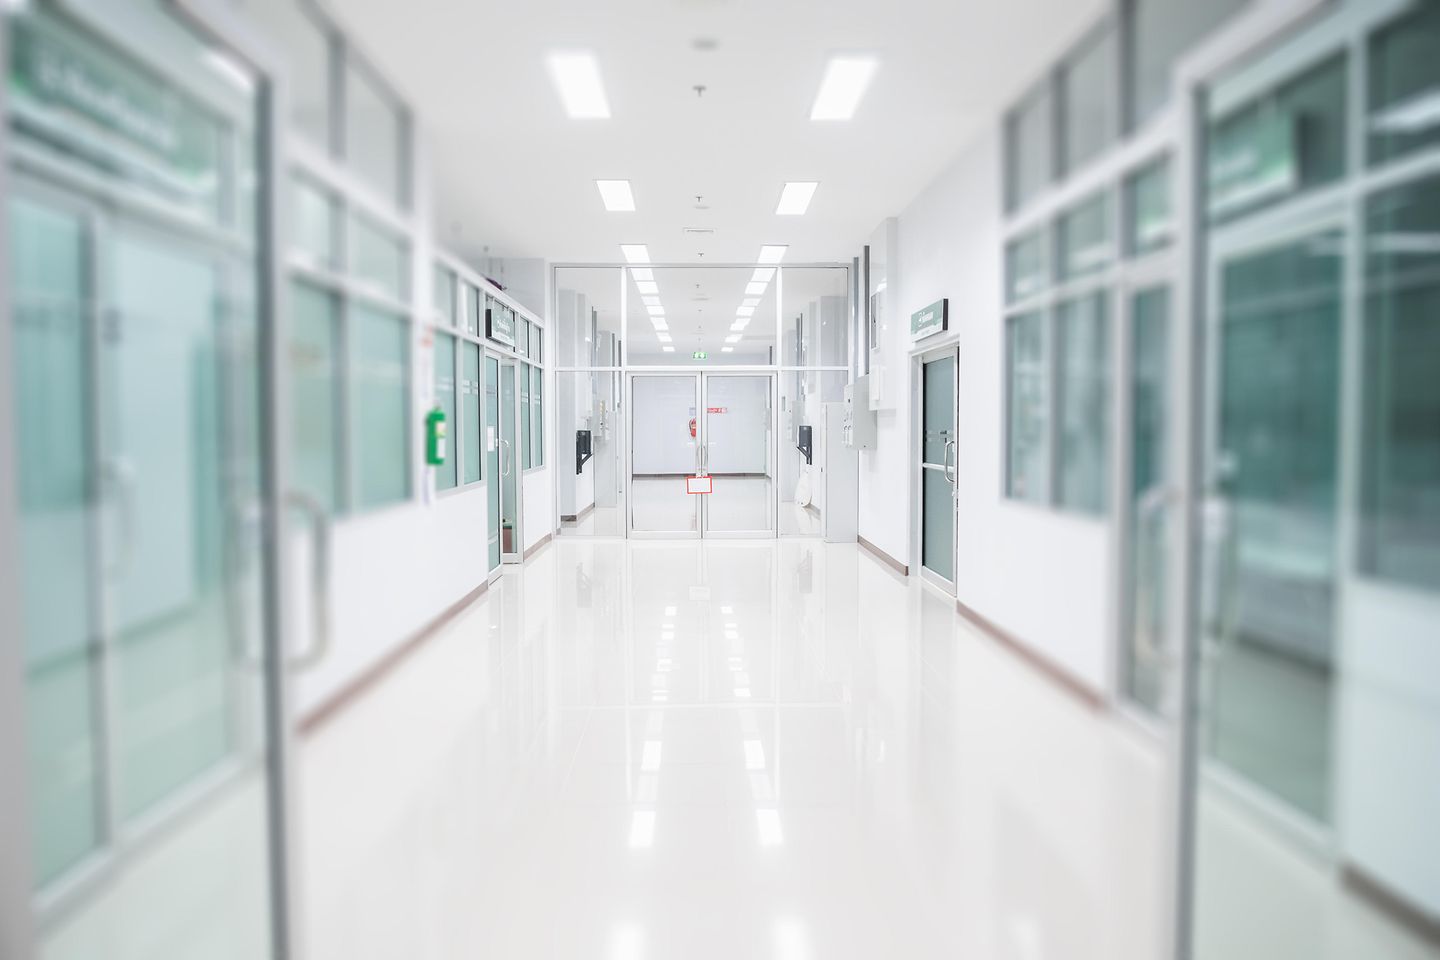 Brightly lit hospital corridor